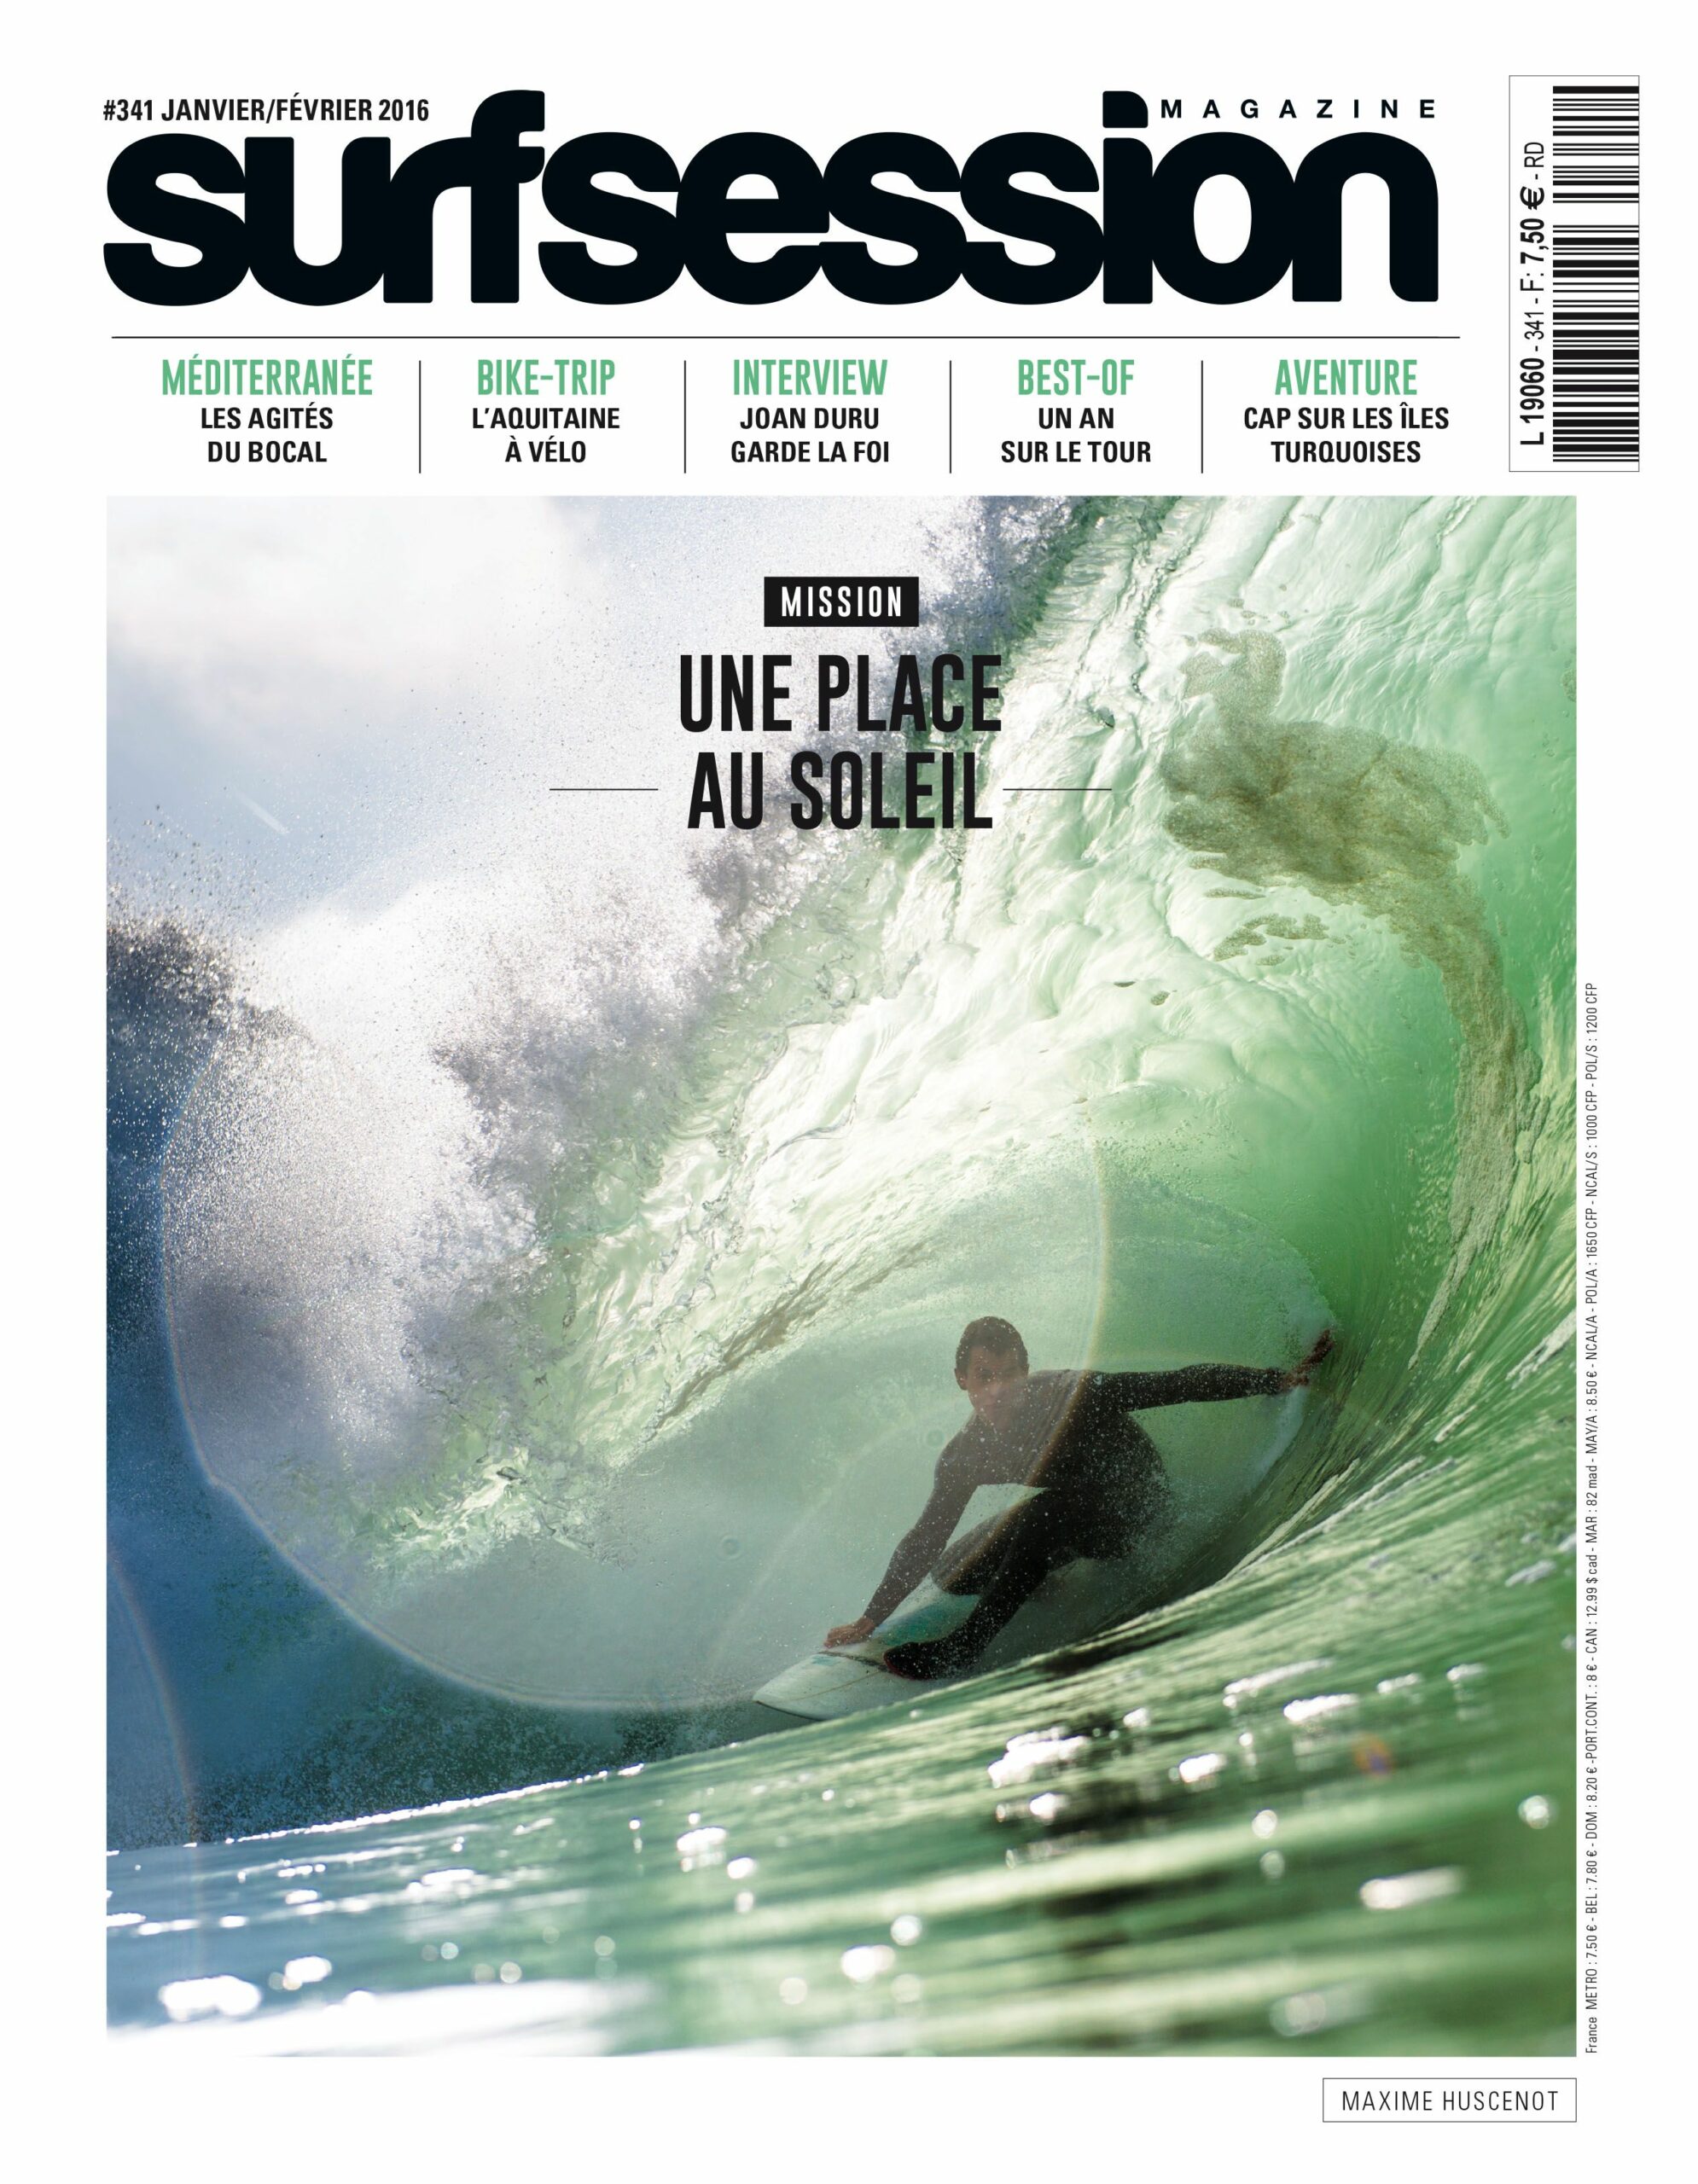 Surf Session 341 Surf Session Magazine